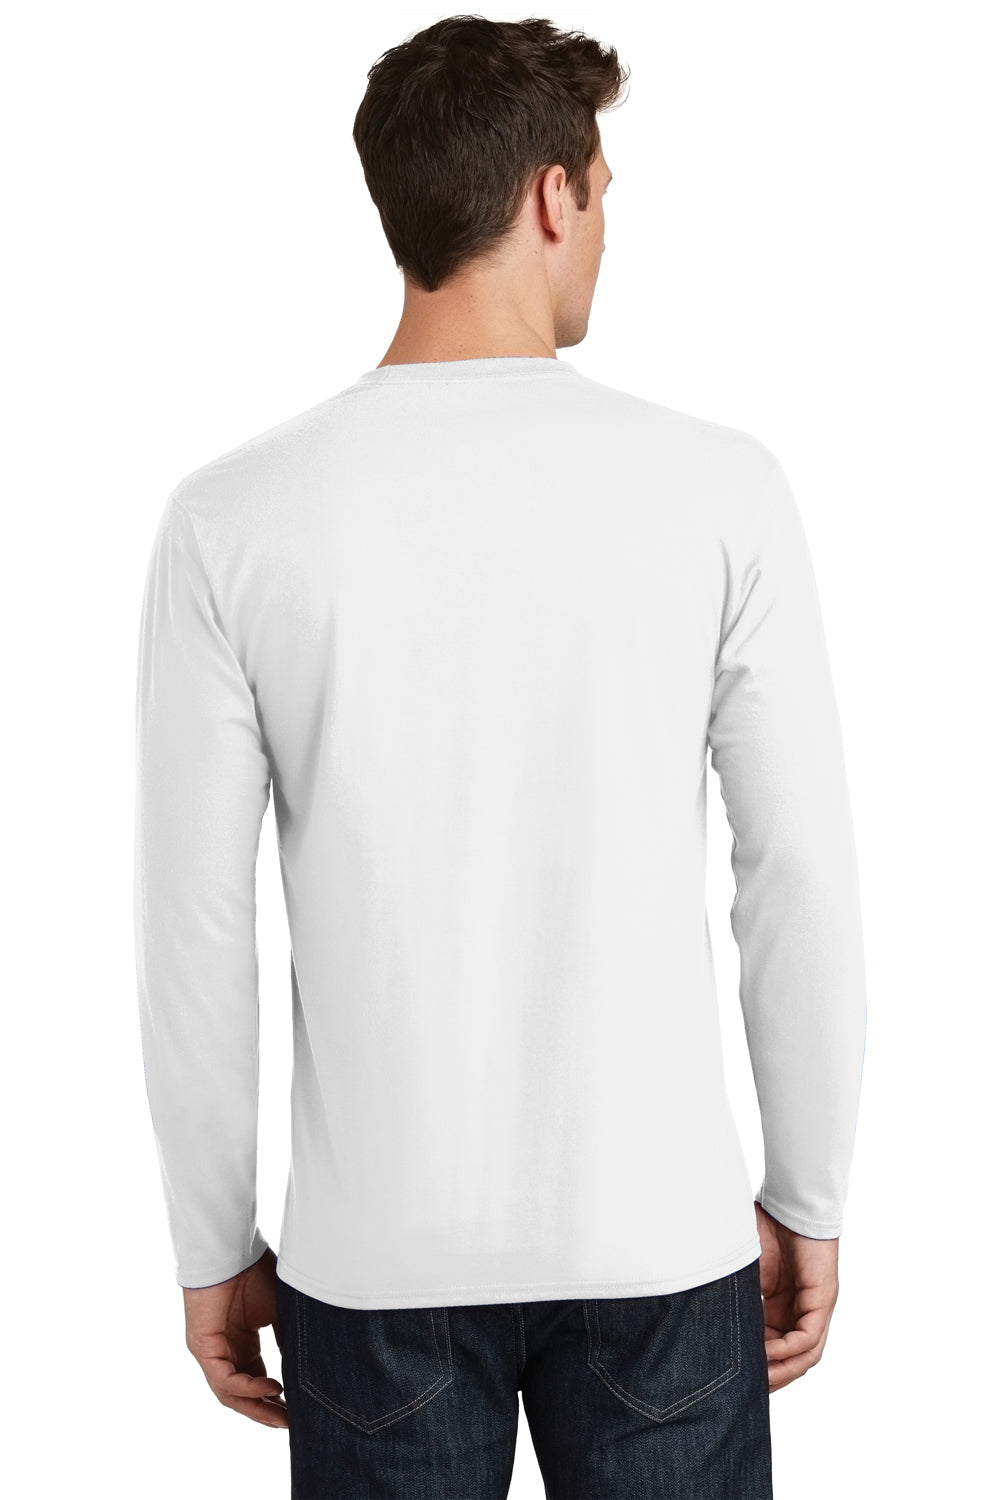 Port & Company PC450LS Mens Fan Favorite Long Sleeve Crewneck T-Shirt White Back